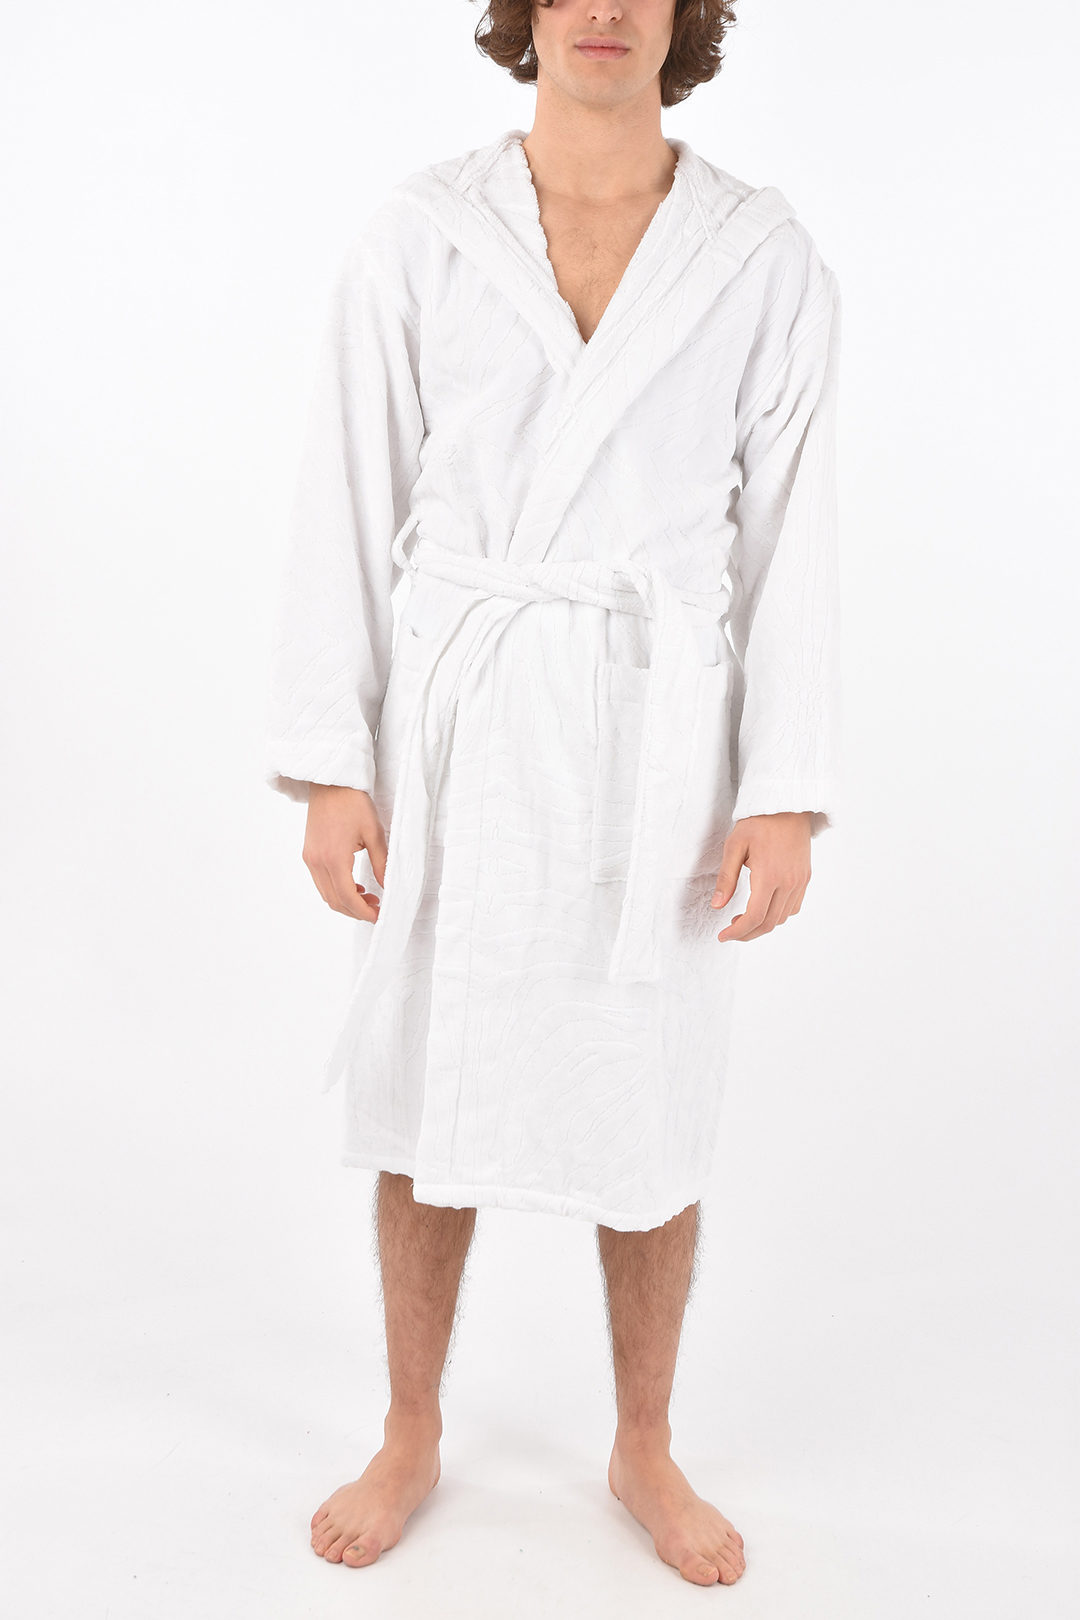 Details about   Roberto Cavalli sponge bathrobe with hood ZEB black unisex 